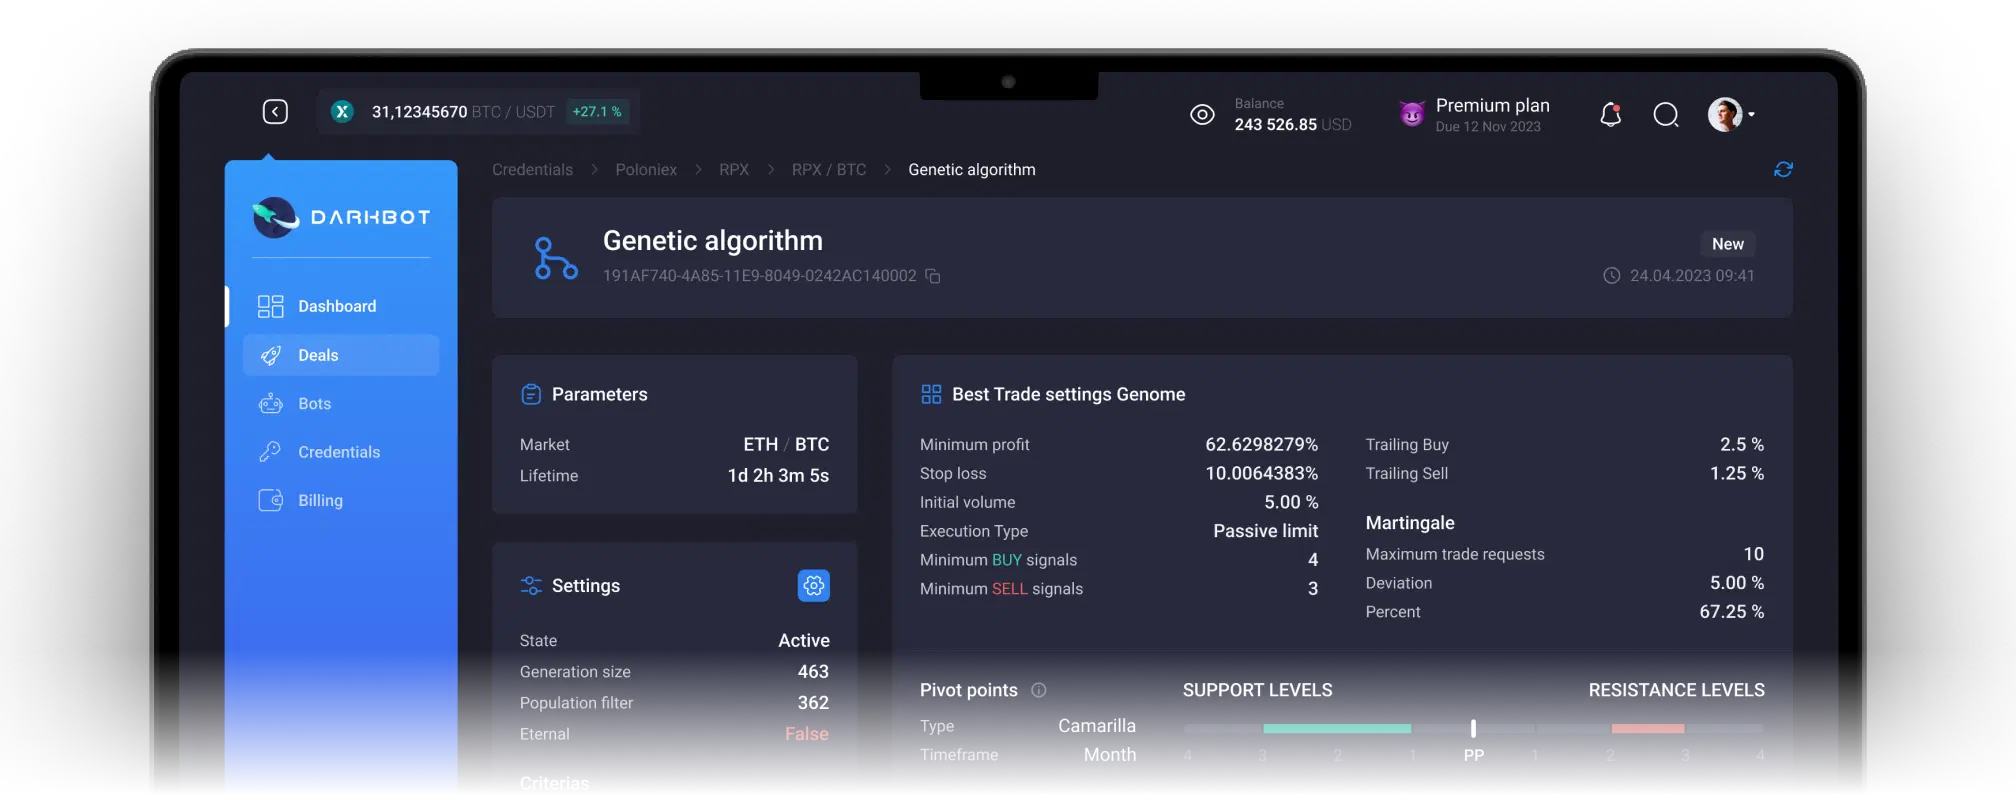 genetic alrorithm page screenshot